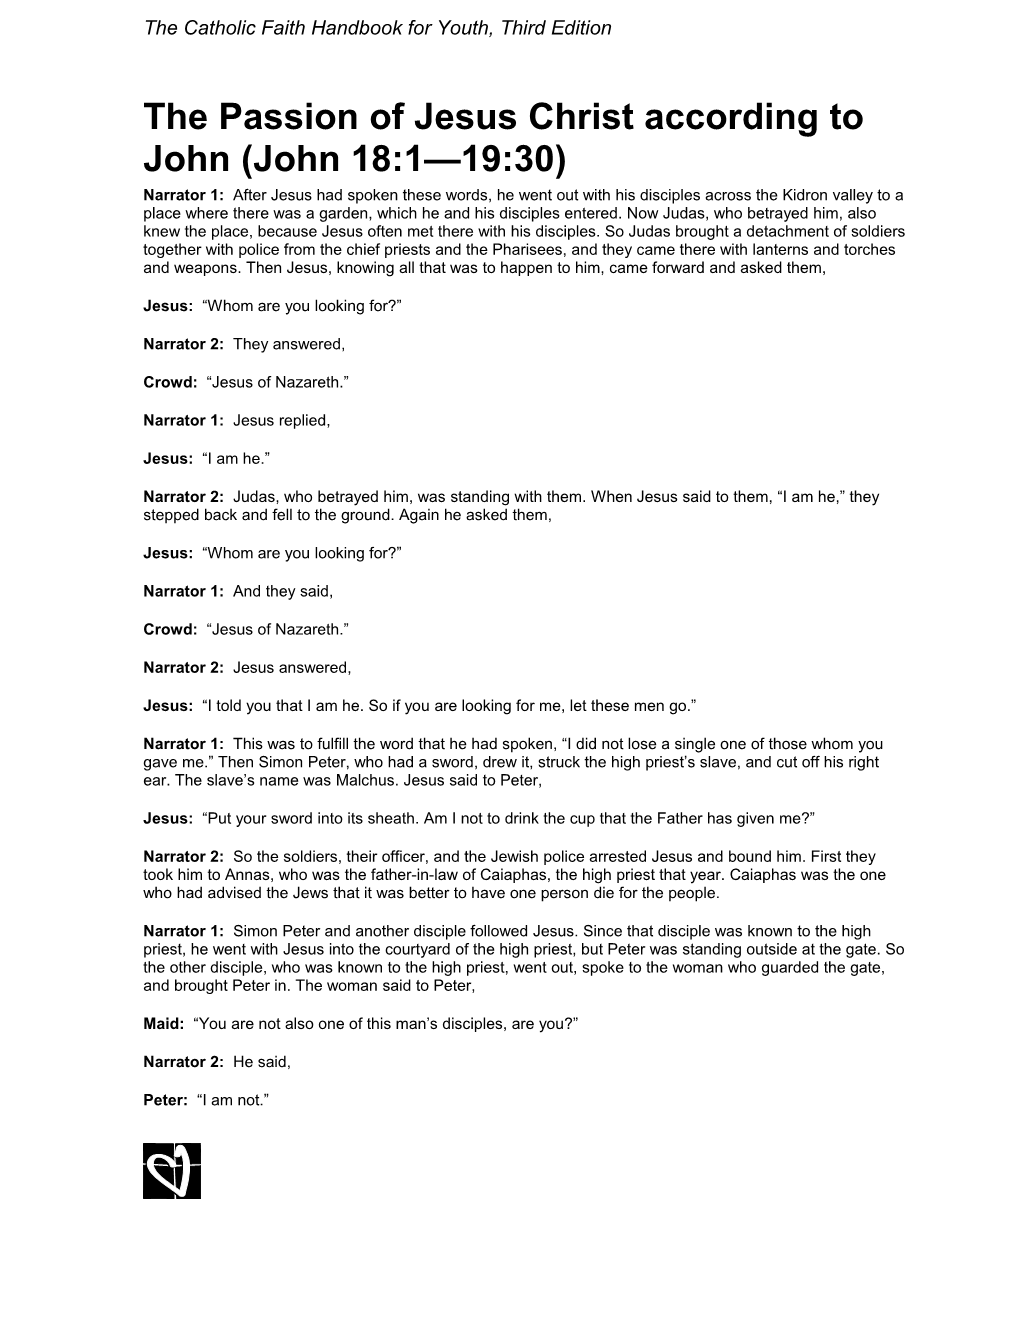 The Passion of Jesus Christ According to John (John 18:1 19:30)